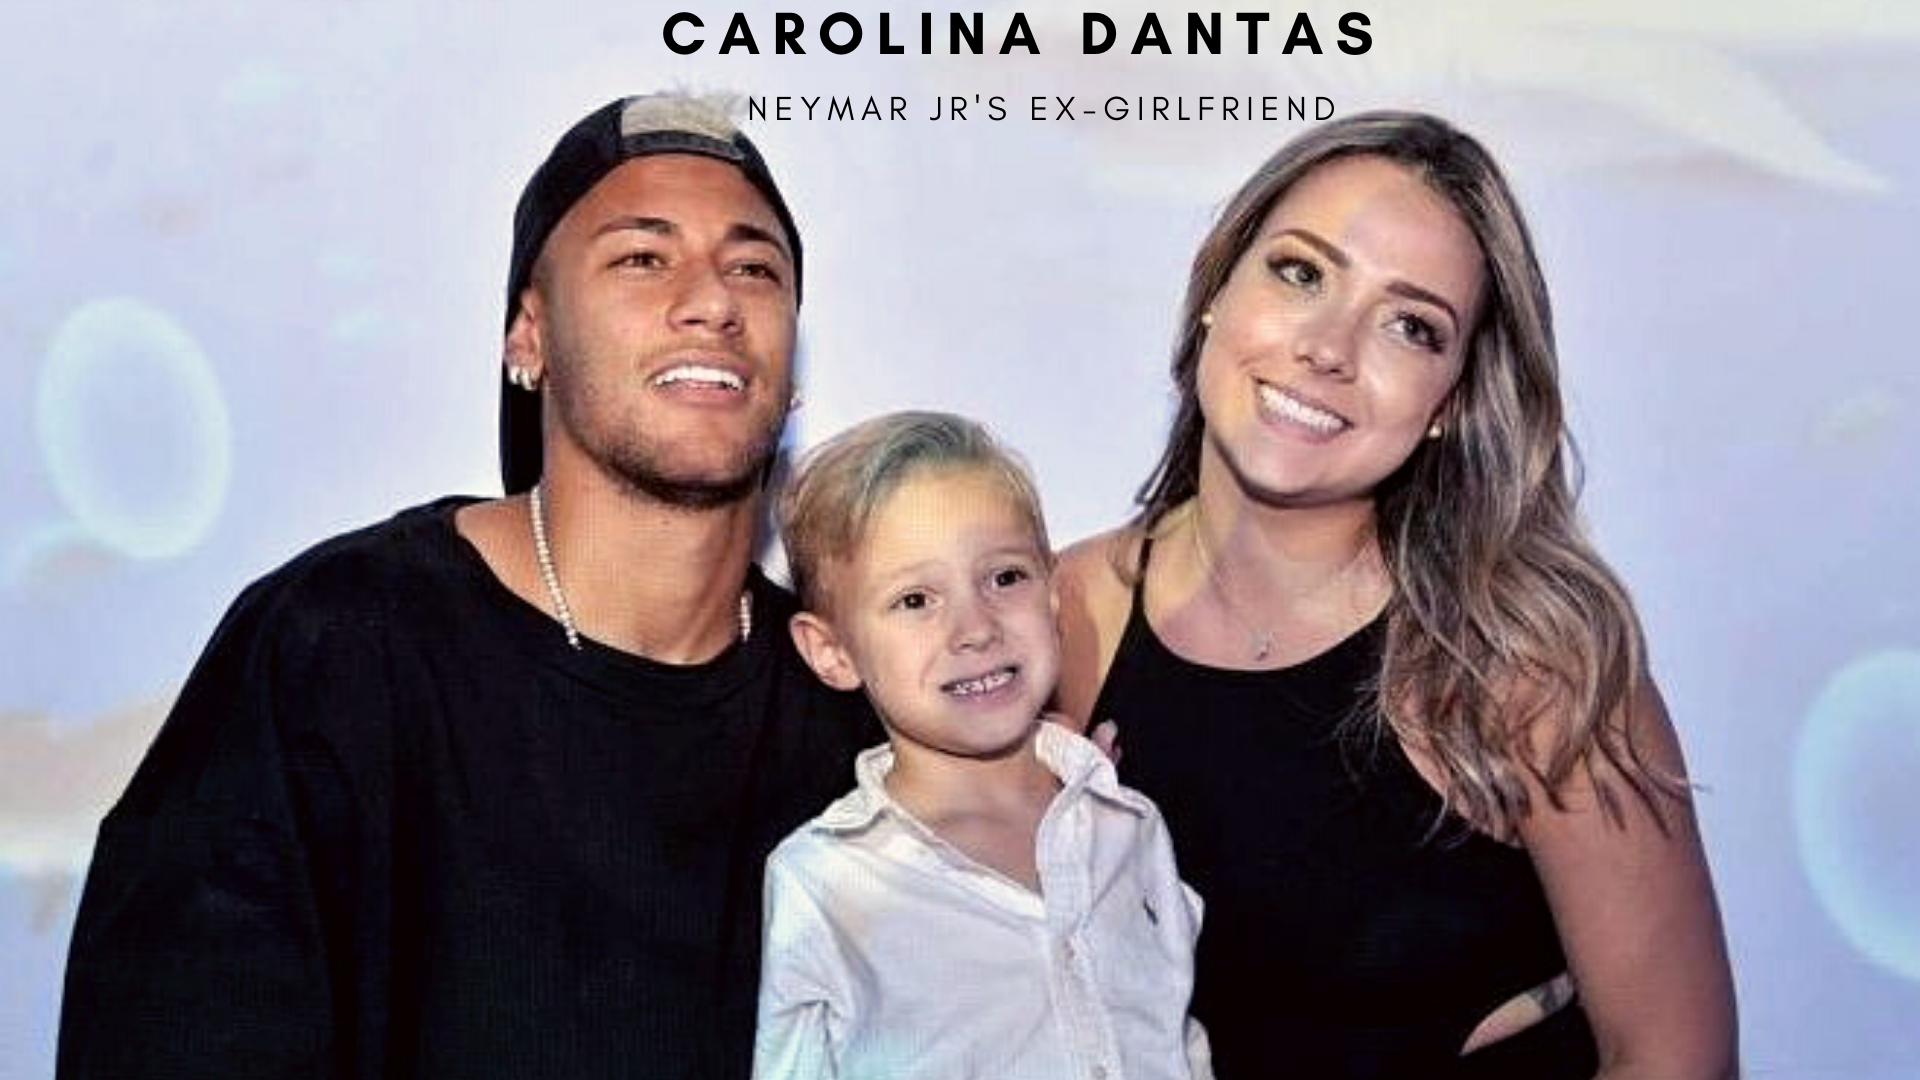 Neymar Jr Ex Girlfriend Carolina Dantas Wiki 2022- Age, Net Worth, Kids,  Family and more